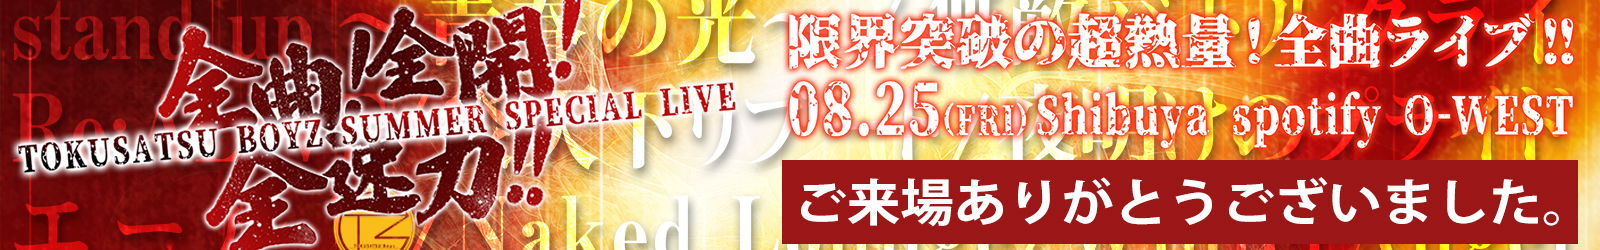 TOKUSATSU BOYZ SUMMER SPECIAL LIVE 全曲！全開！全速力！！